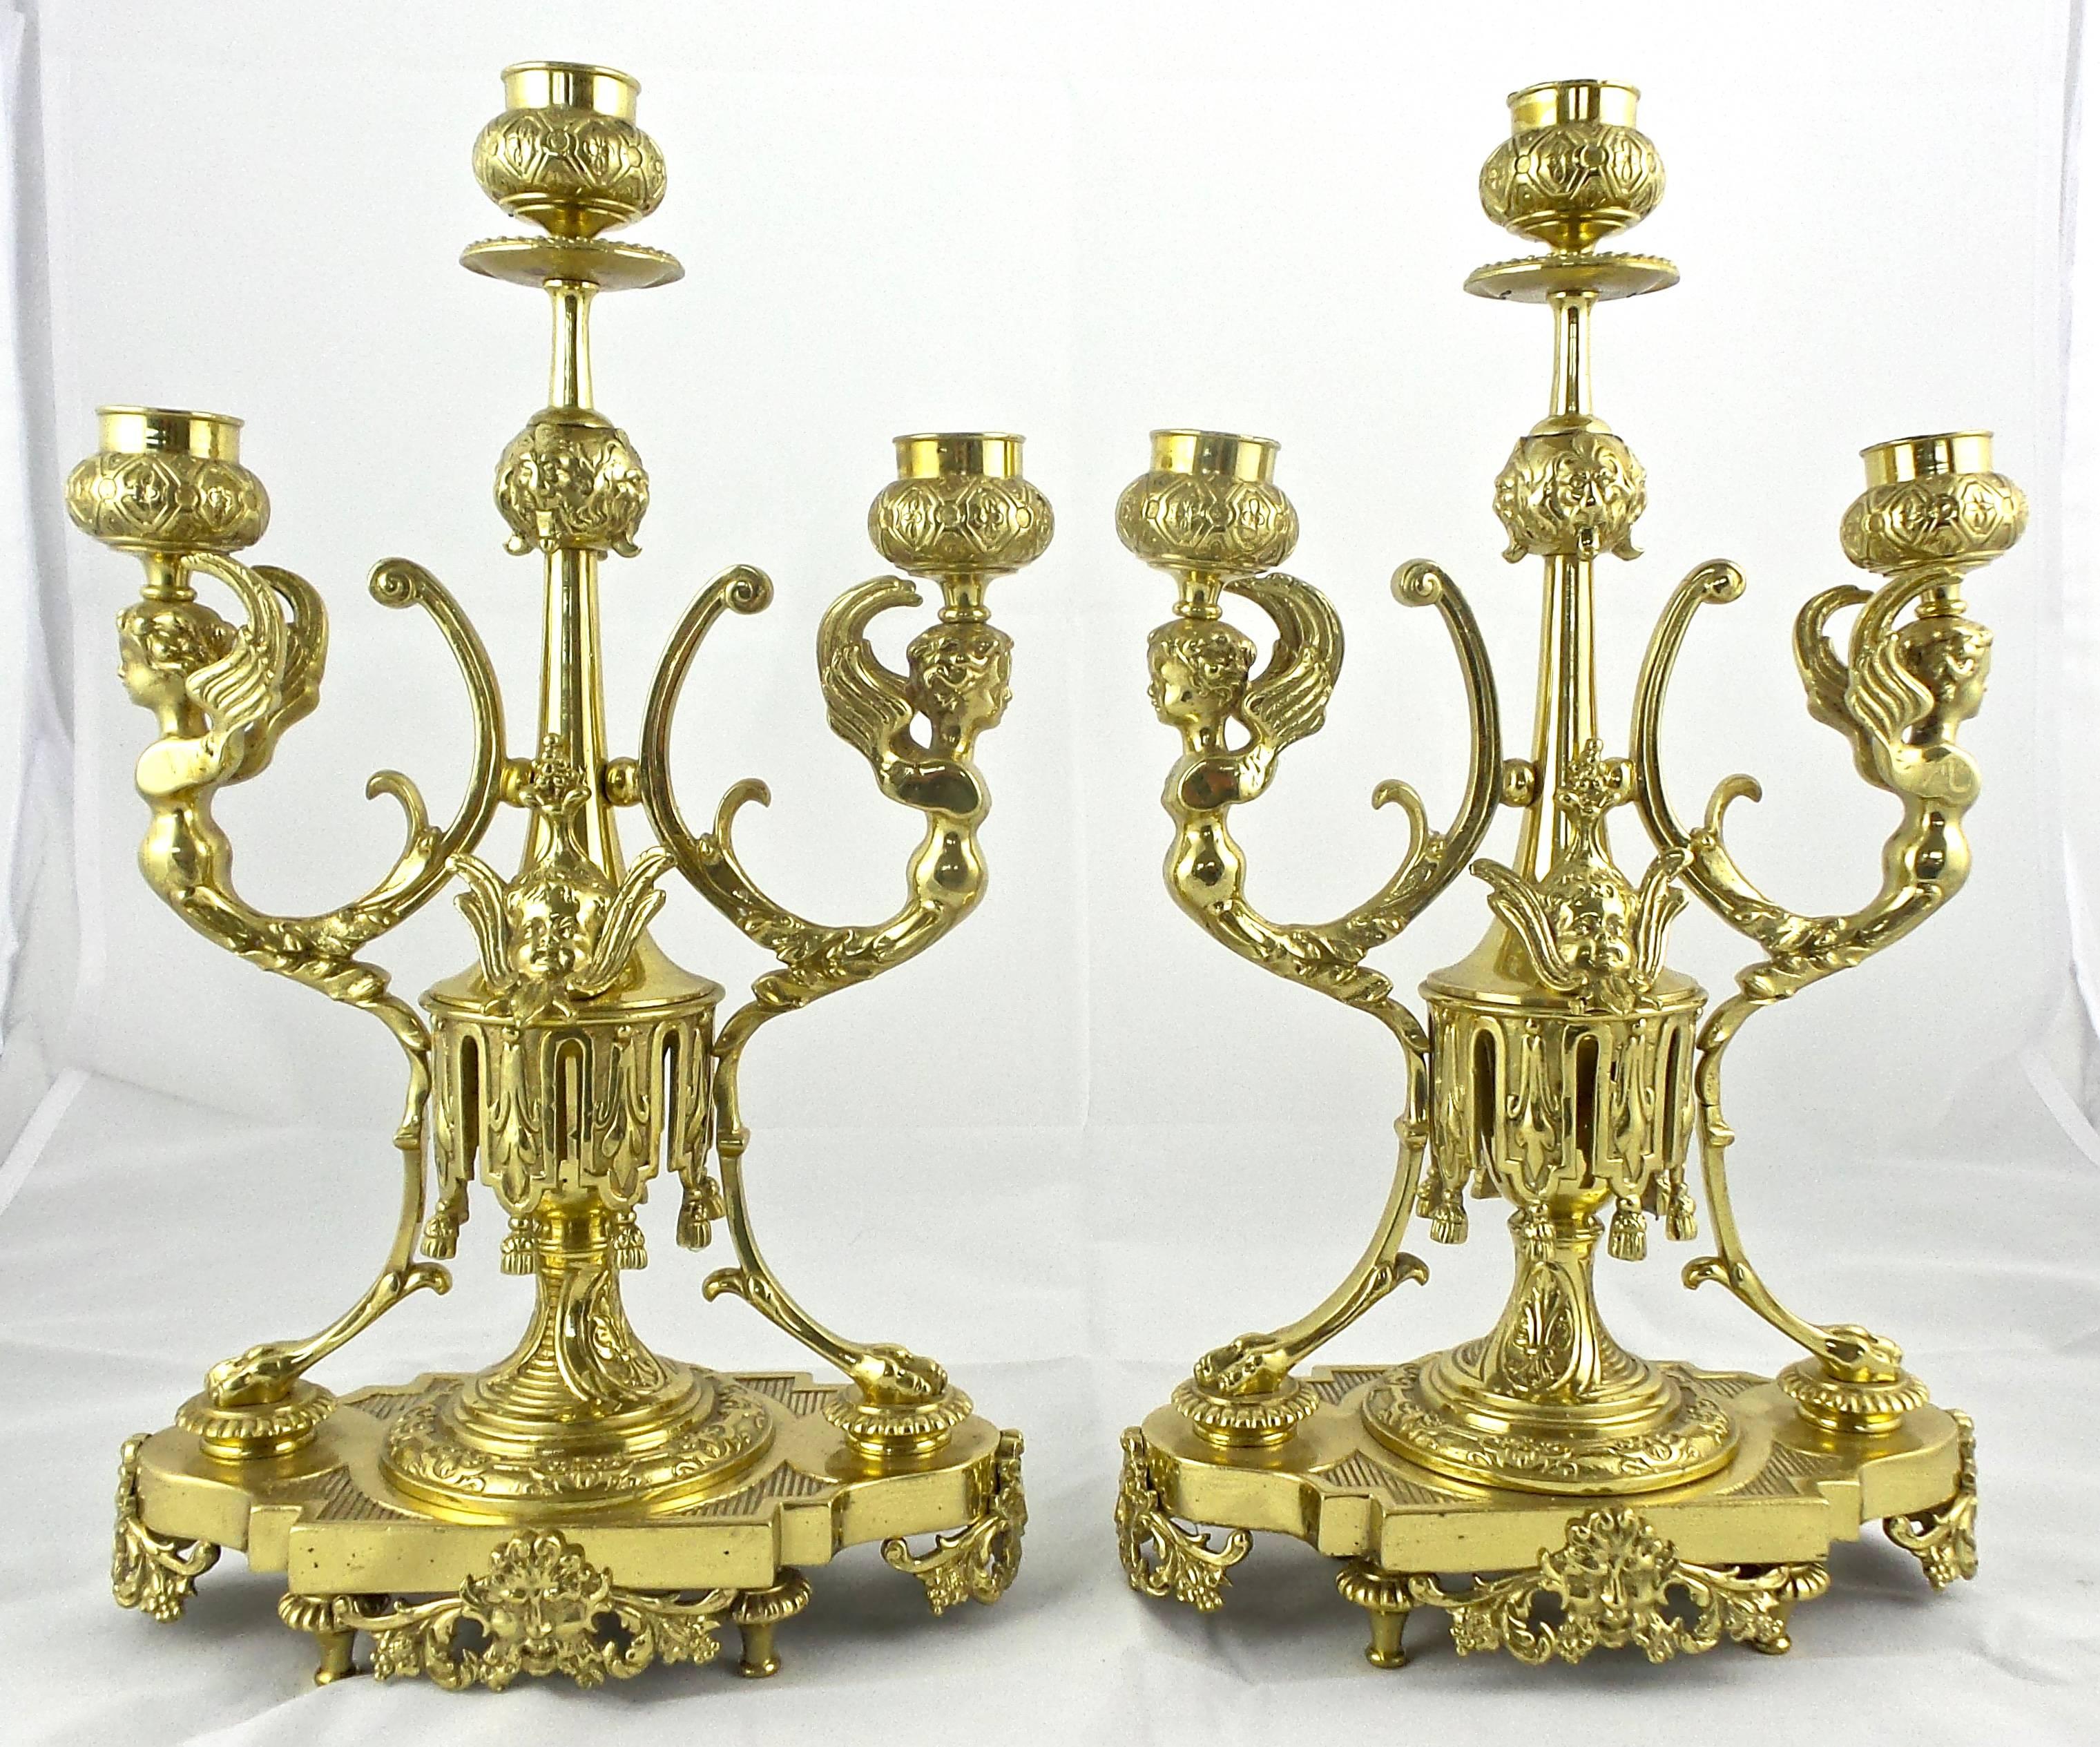 Late 19th Century 19th Century French Solid Gilt Brass Three-Piece Mantle Clock Garniture Set